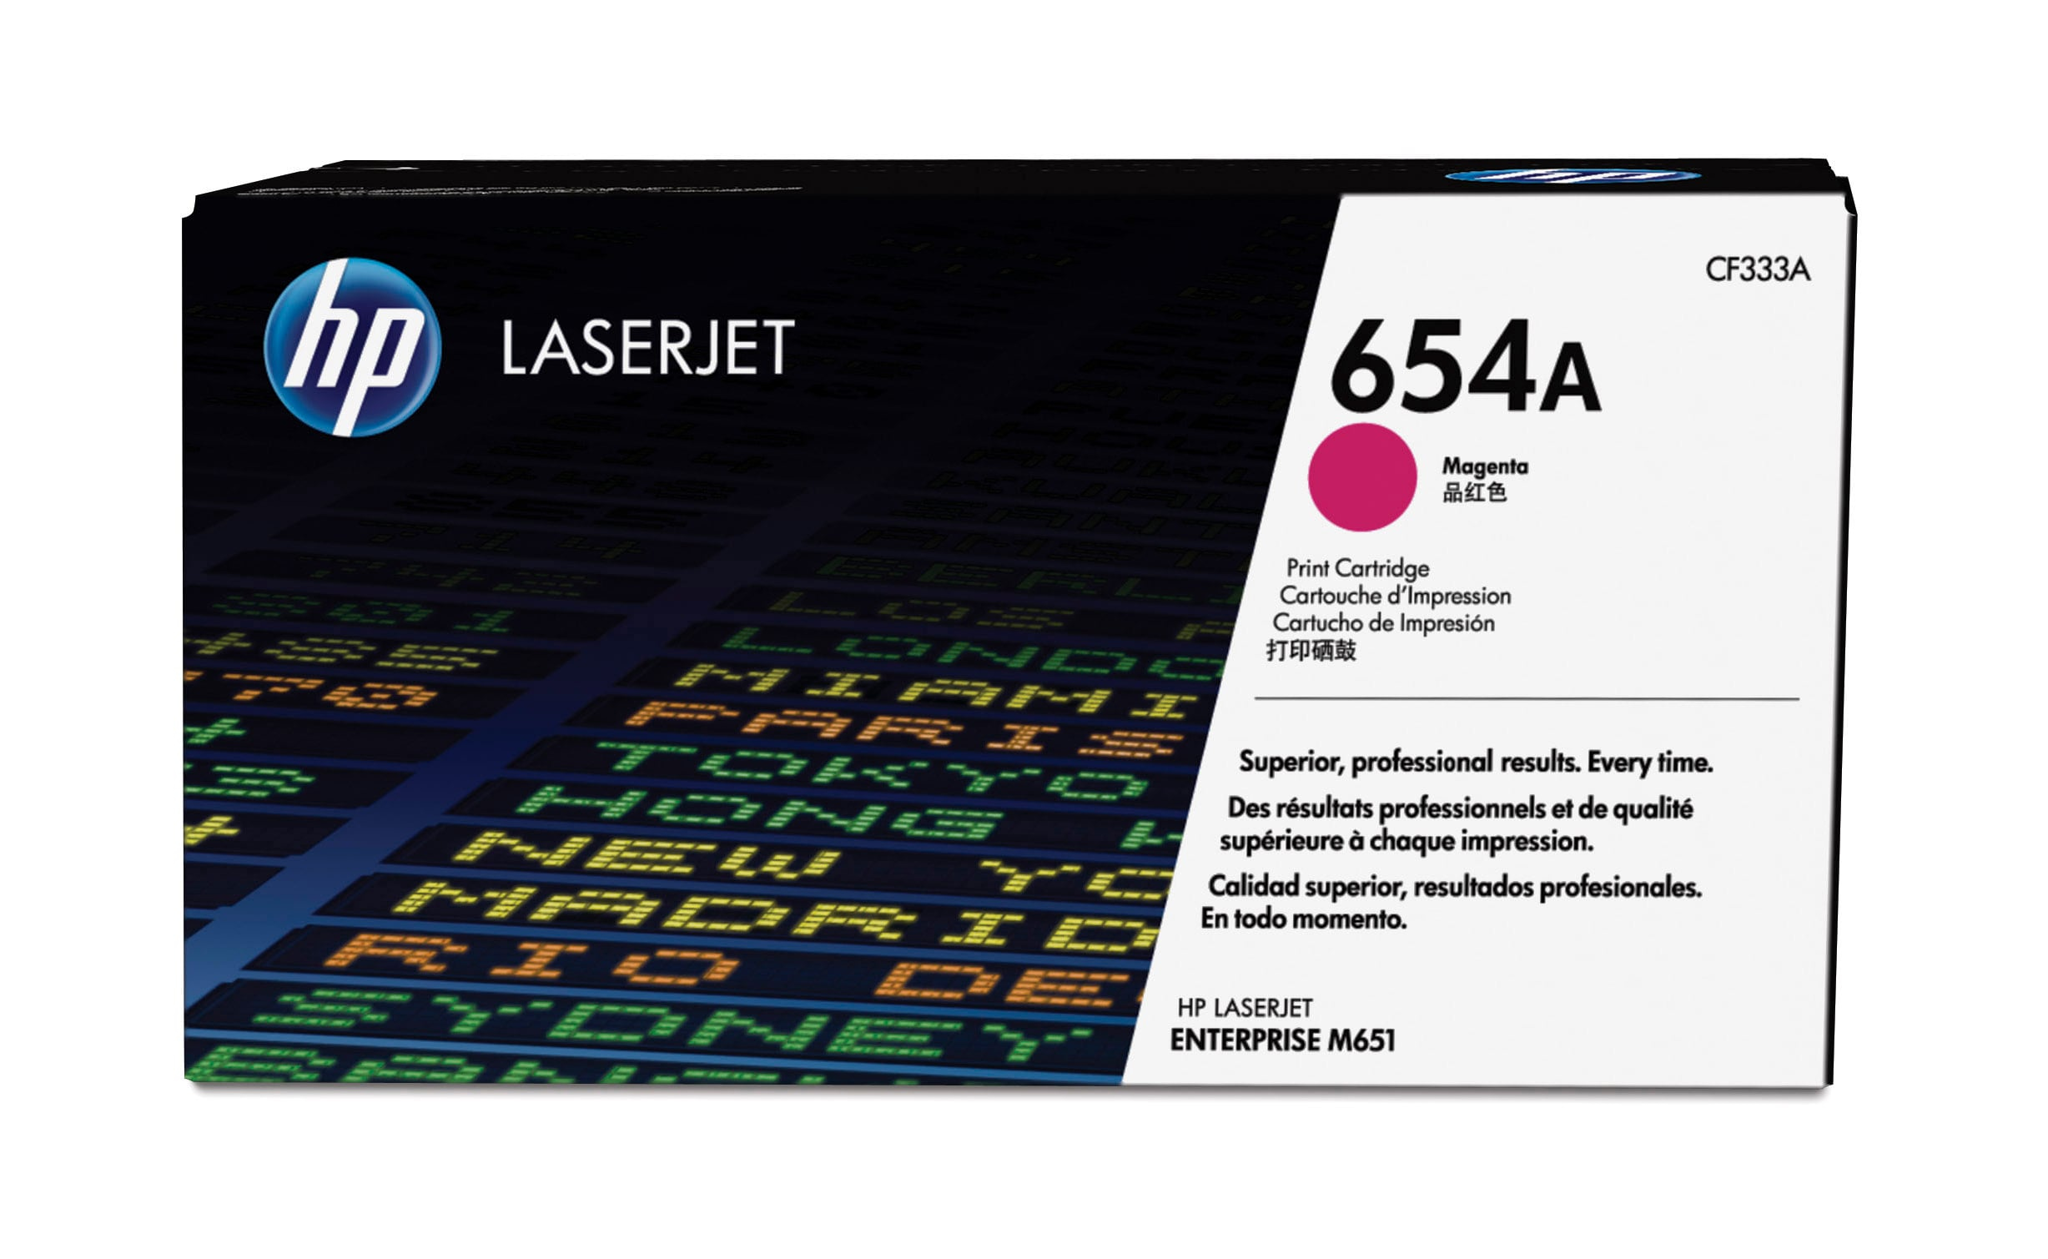 Bild von HP 654A Magenta Original LaserJet Tonerkartusche - 15000 Seiten - Magenta - 1 Stück(e)